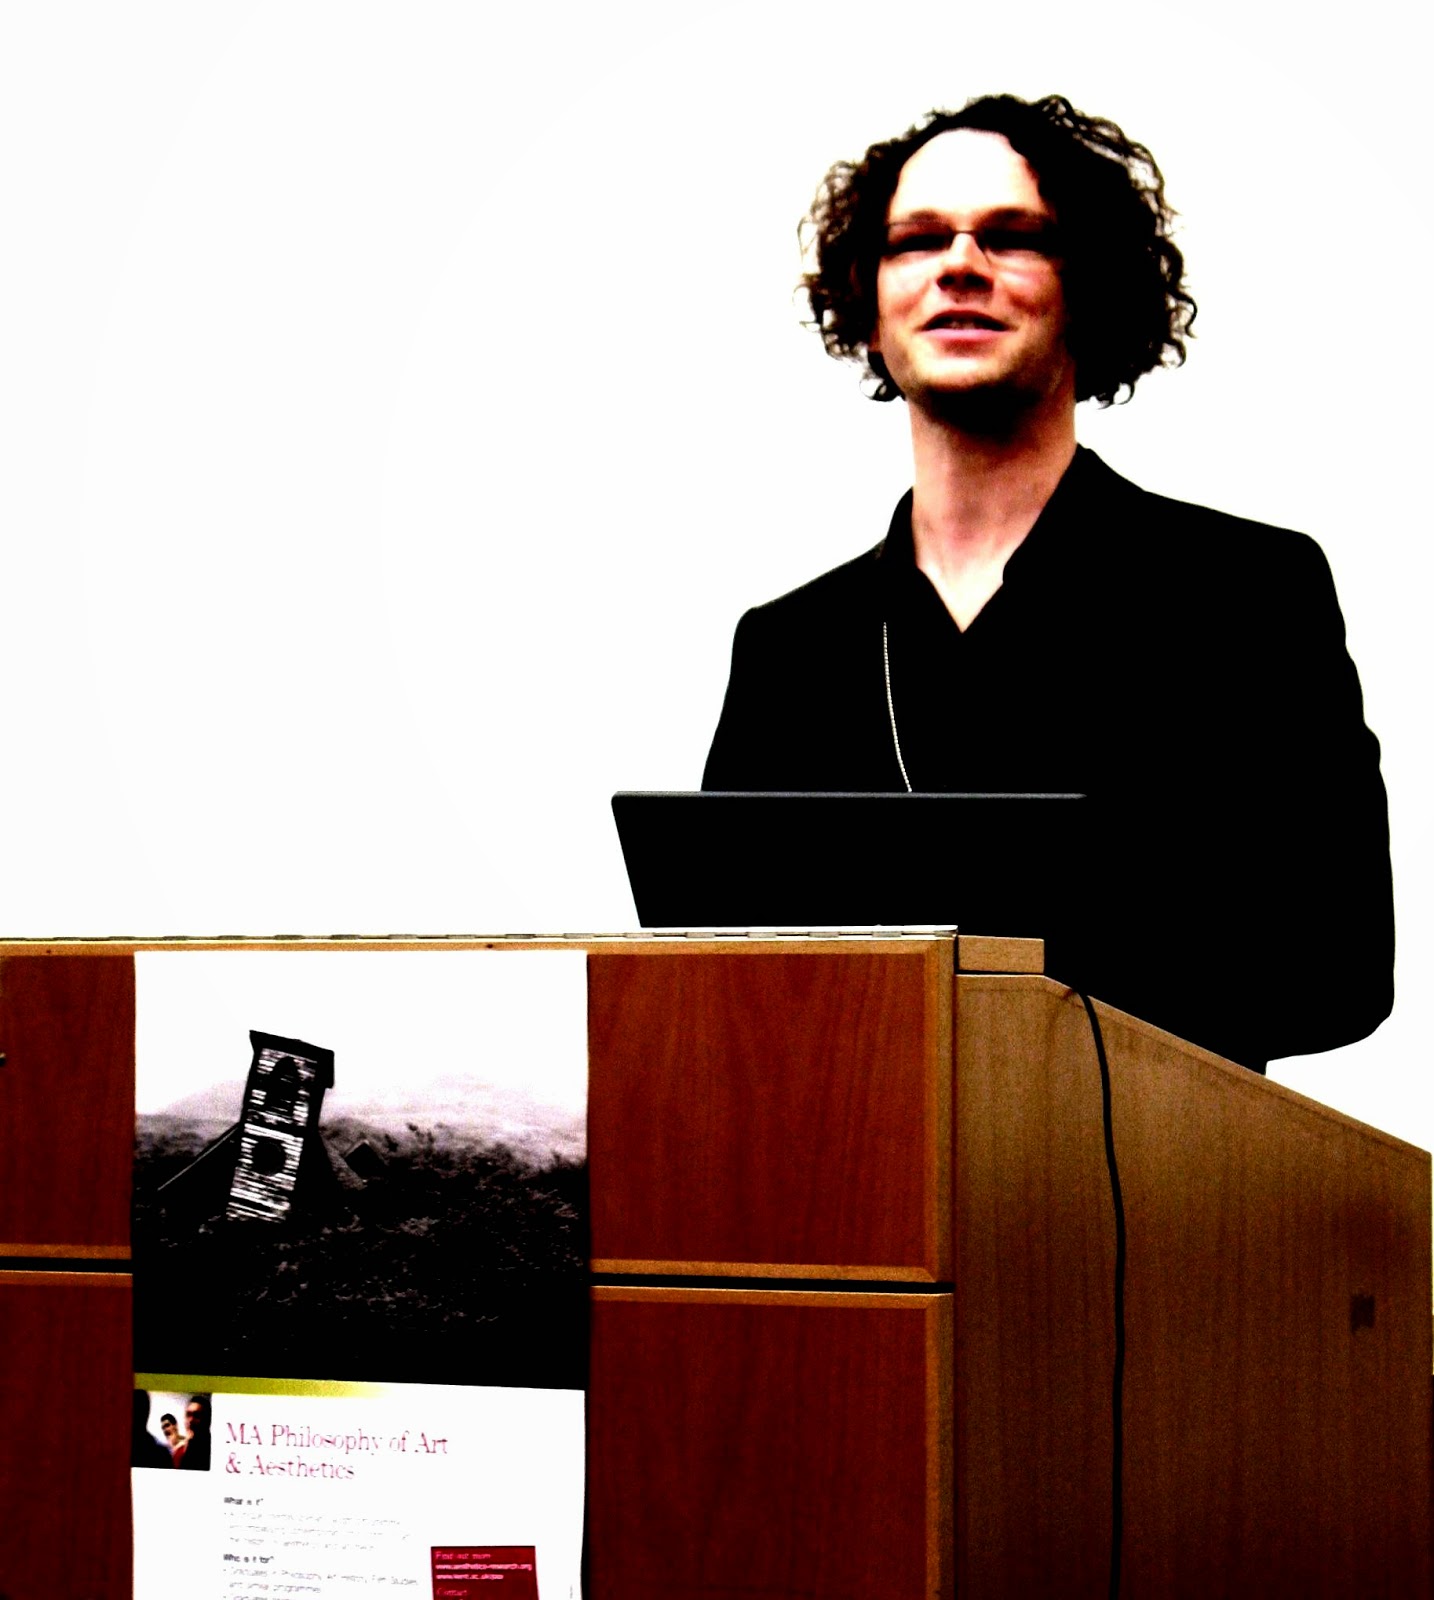 Photograph of Hans Maes at a podium